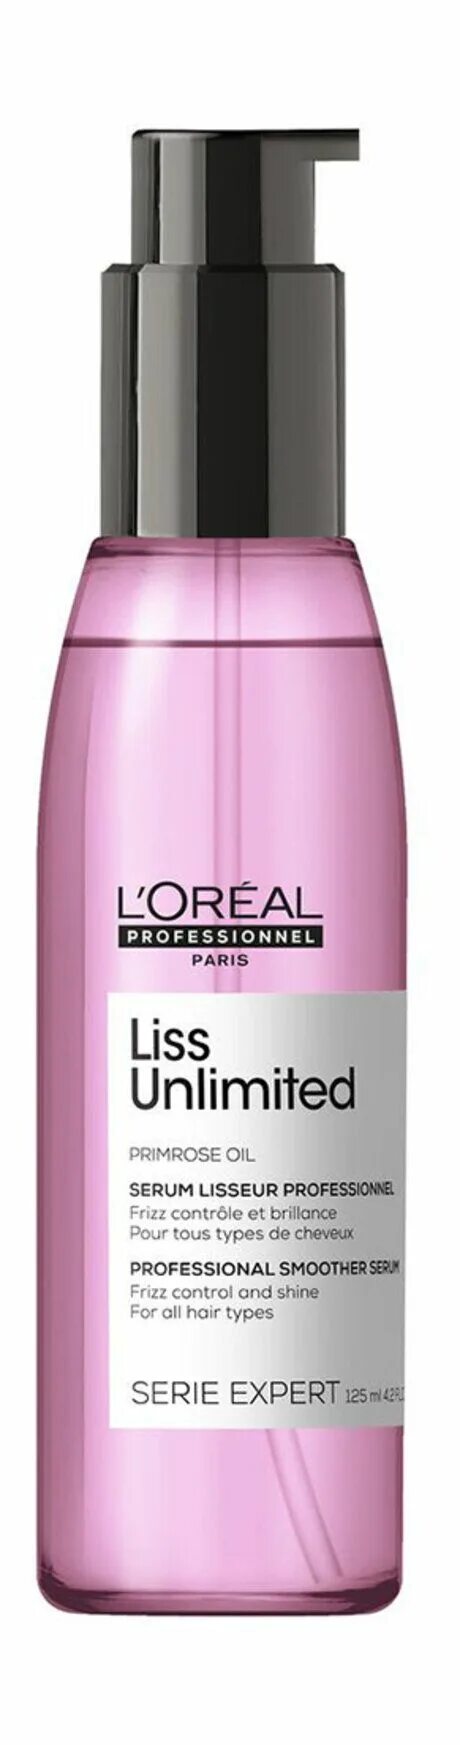 Loreal professional Liss Unlimited .масло для непослушных волос , 125 мл. Лореаль Liss Unlimited. Loreal professional масло Liss Unlimited. L'Oreal Liss Unlimited. Масло l oreal professionnel